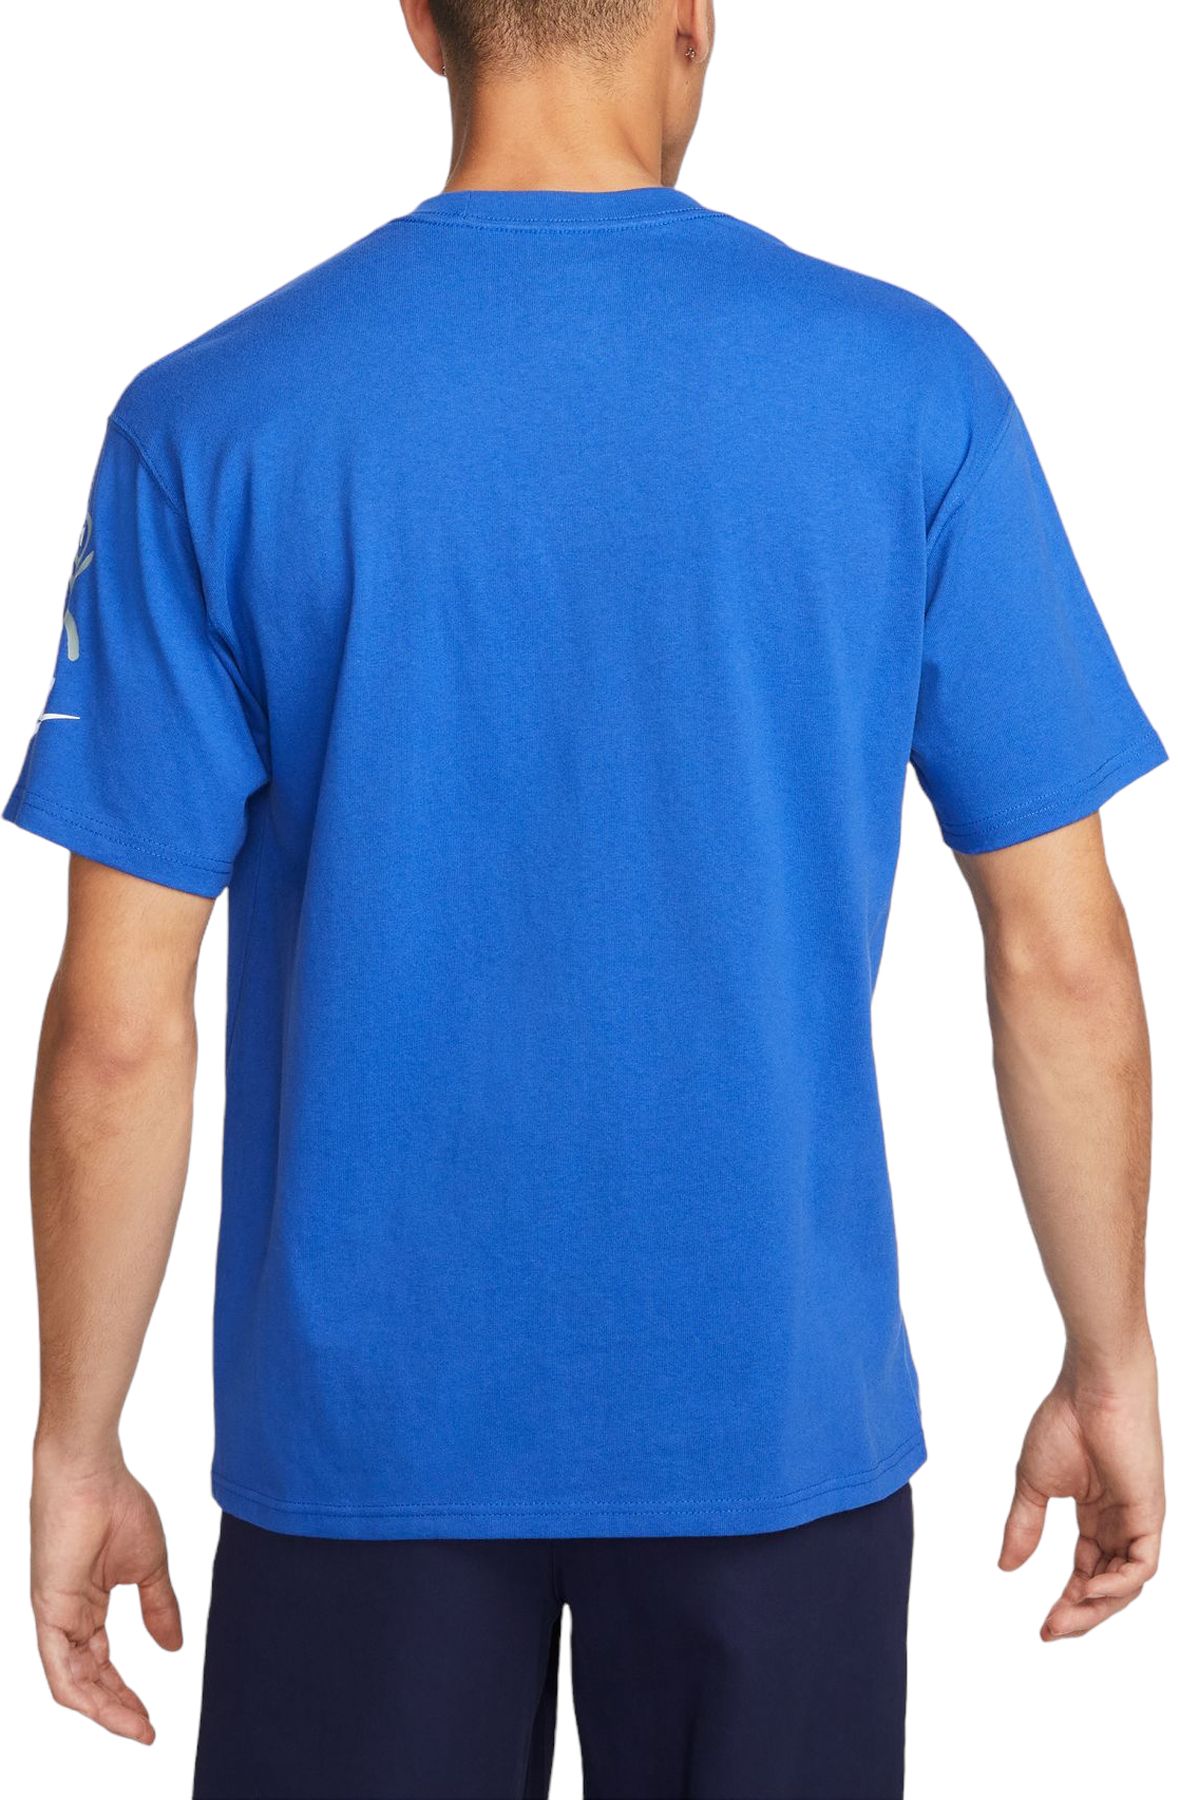 NIKE Sportswear T-Shirt 480 - DZ2850 Shiekh